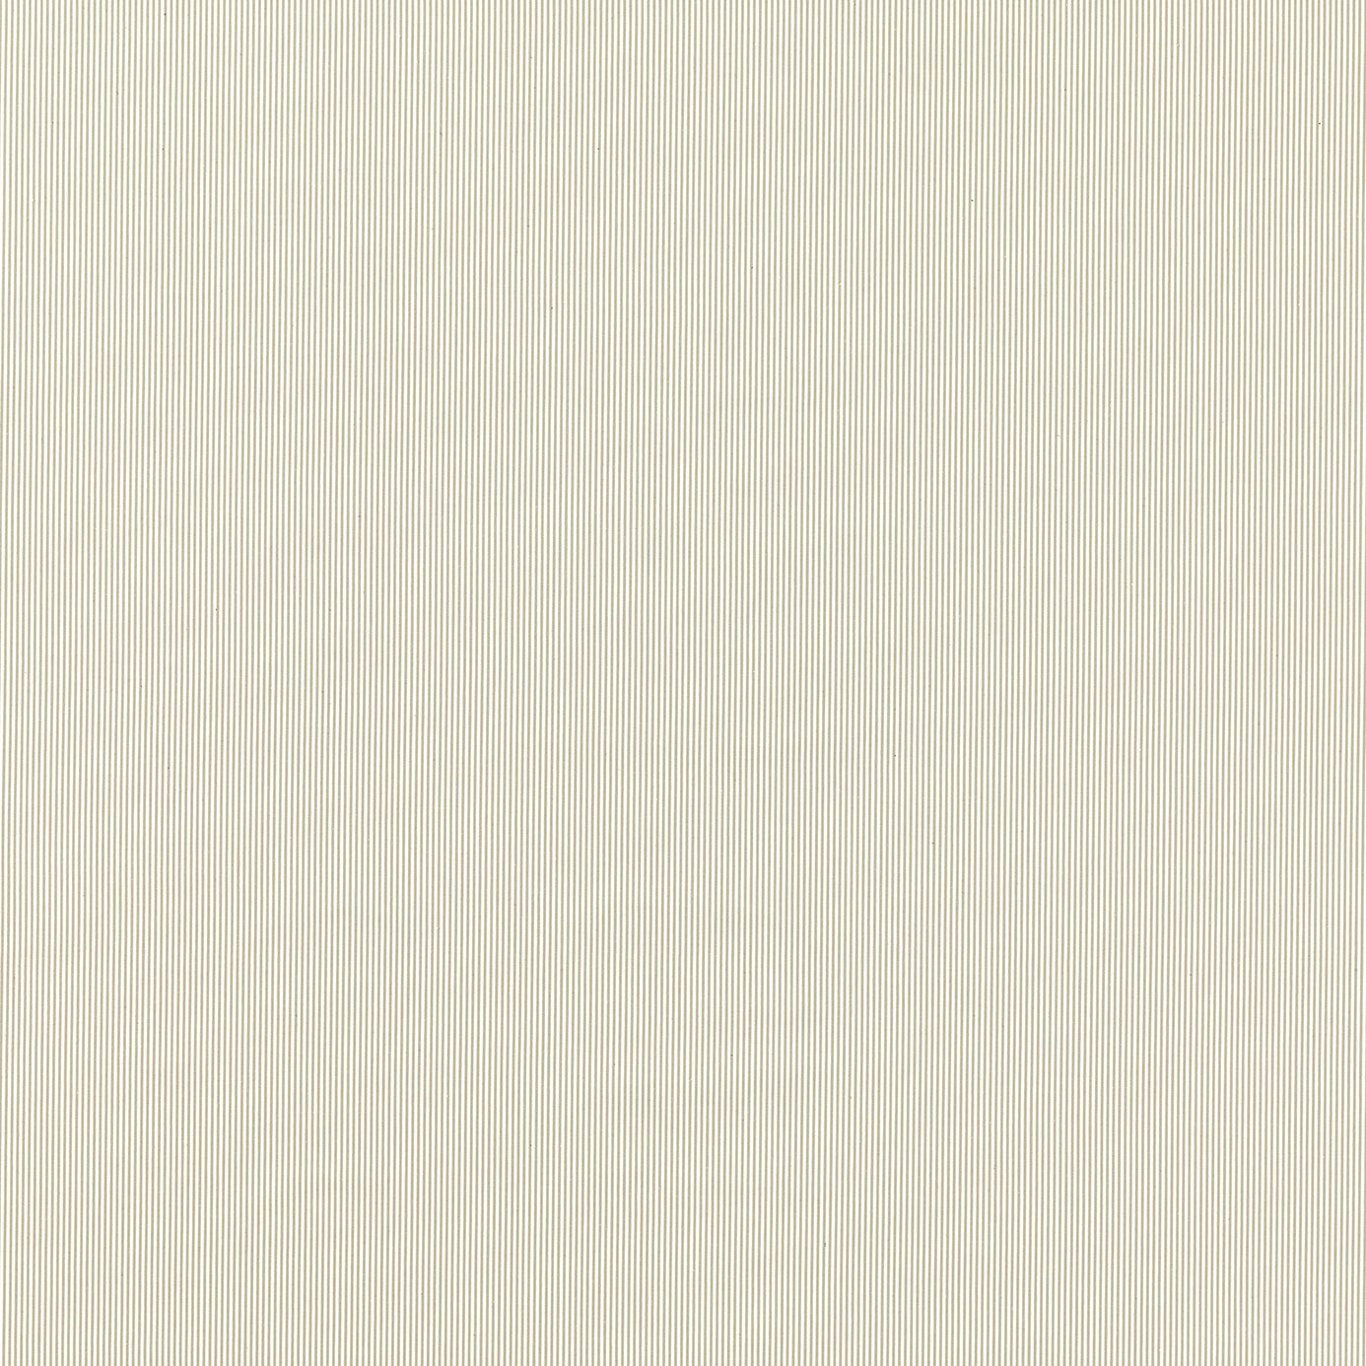 Breton Fabric by Clarke & Clarke - F1498/04 - Dove